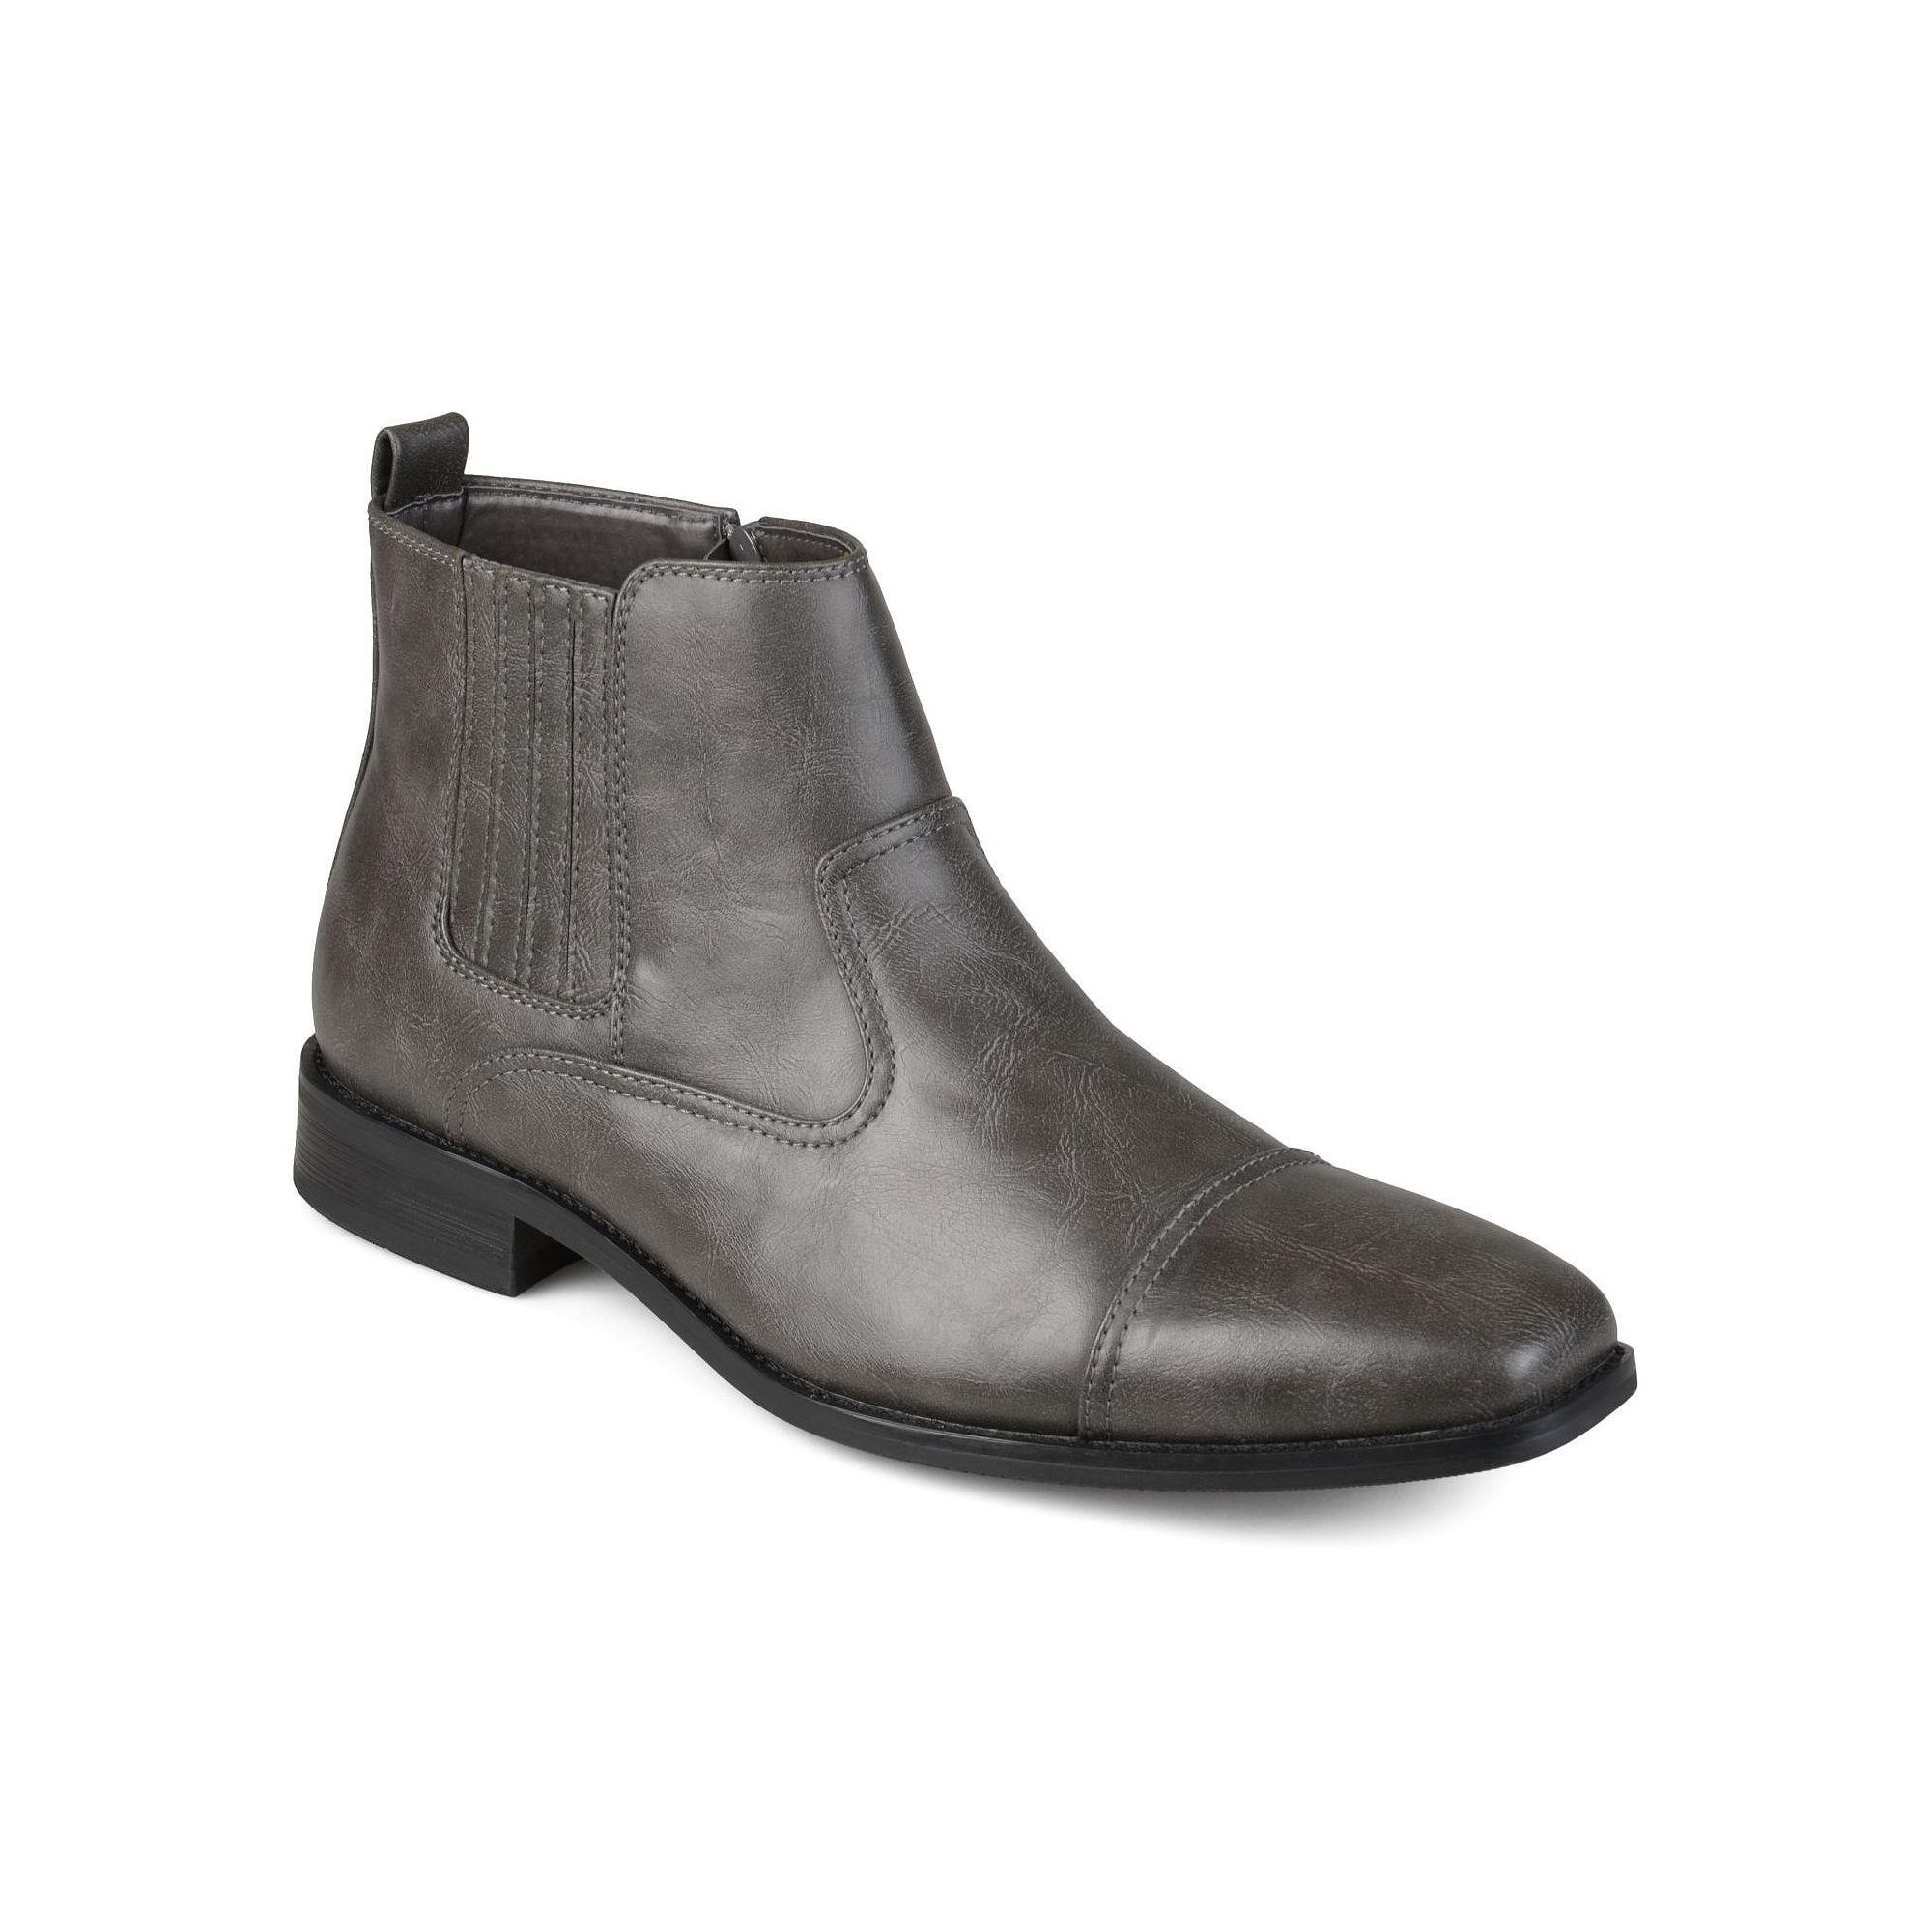 Vance Co. Shoes Vance Chelsea Boot Grey 10.5 $70